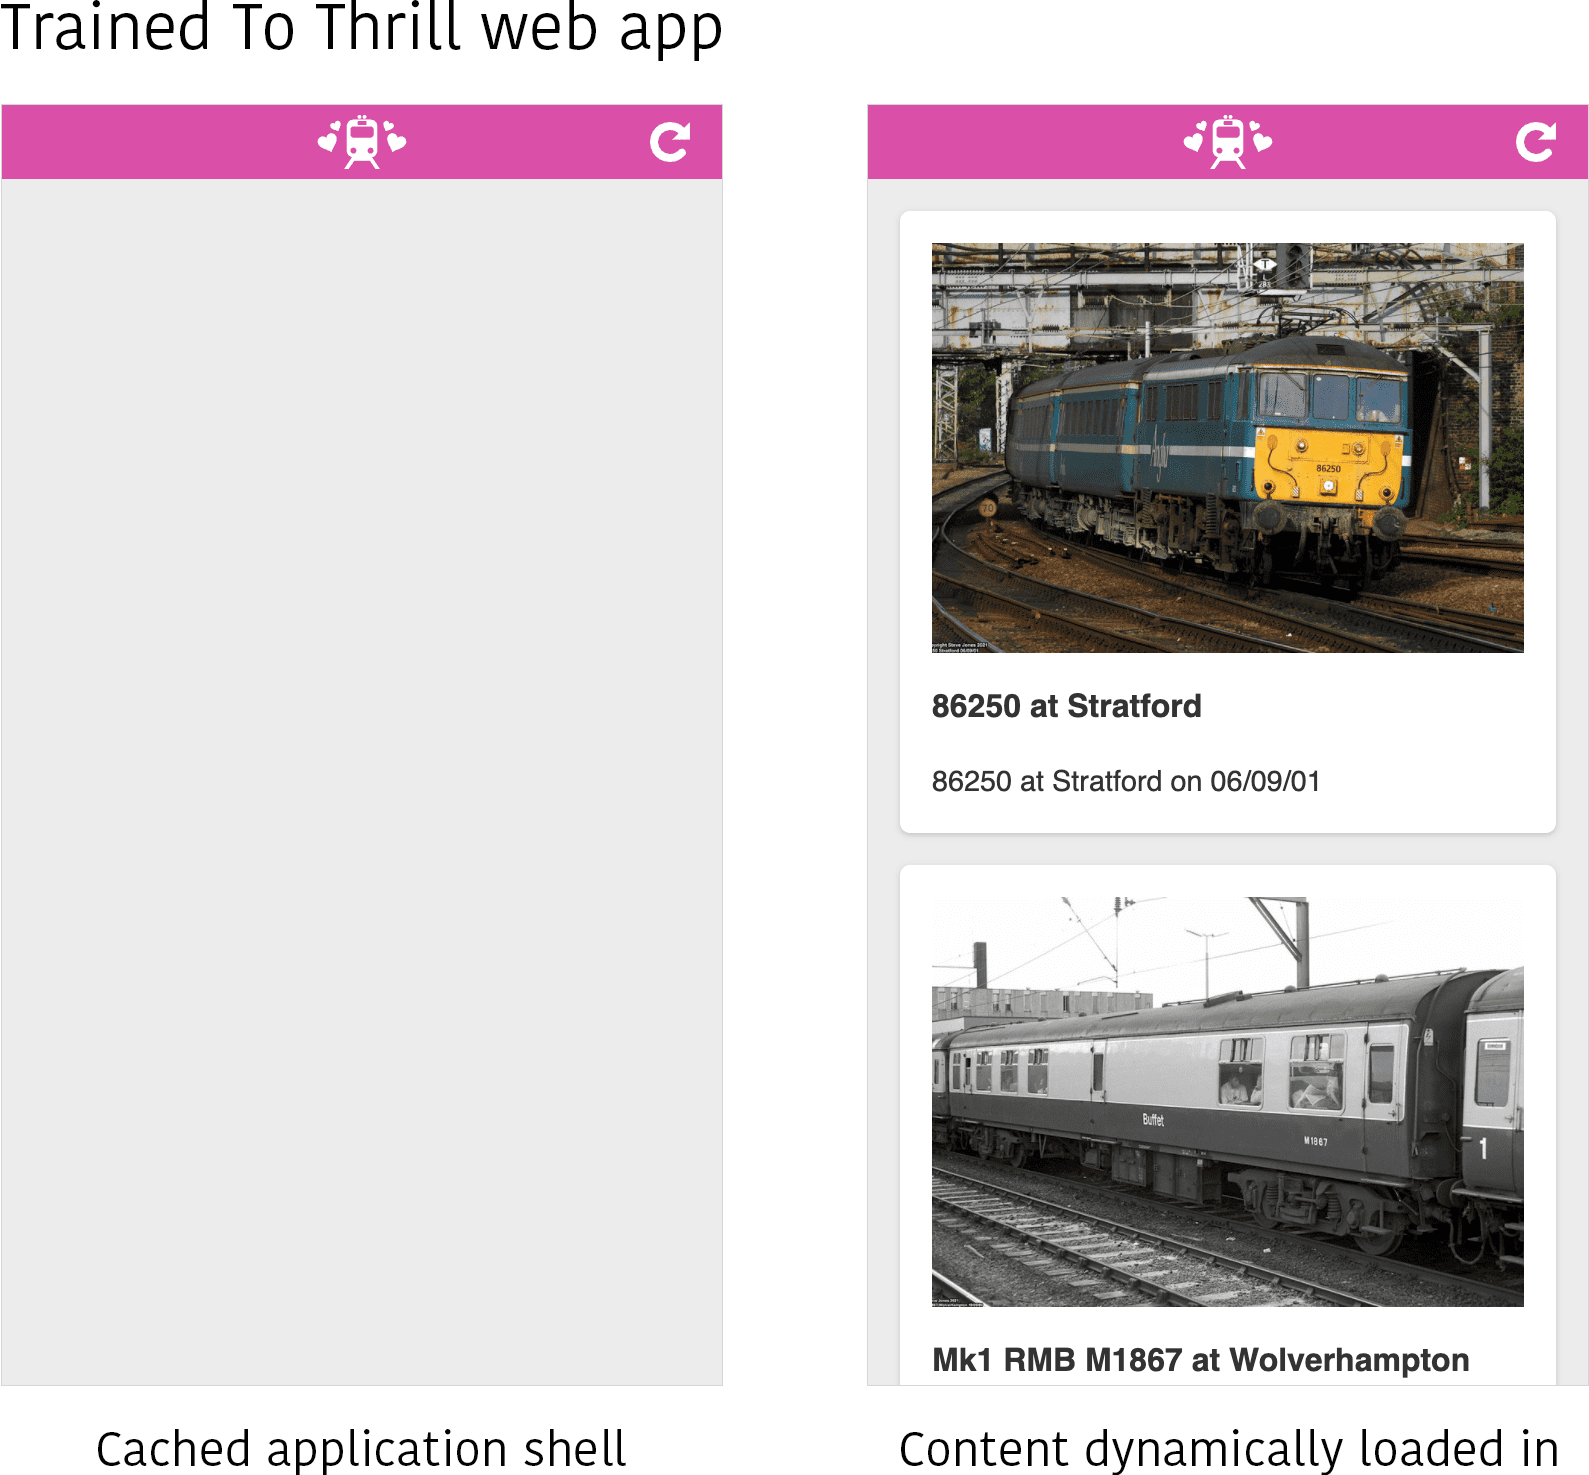 Trained to Thrill 網頁應用程式在兩個不同狀態下的螢幕截圖。左側只有快取的應用程式殼層會顯示，其中未填入內容。右側的內容 (一些火車的圖片) 會以動態方式載入至應用程式殼層的內容區域。